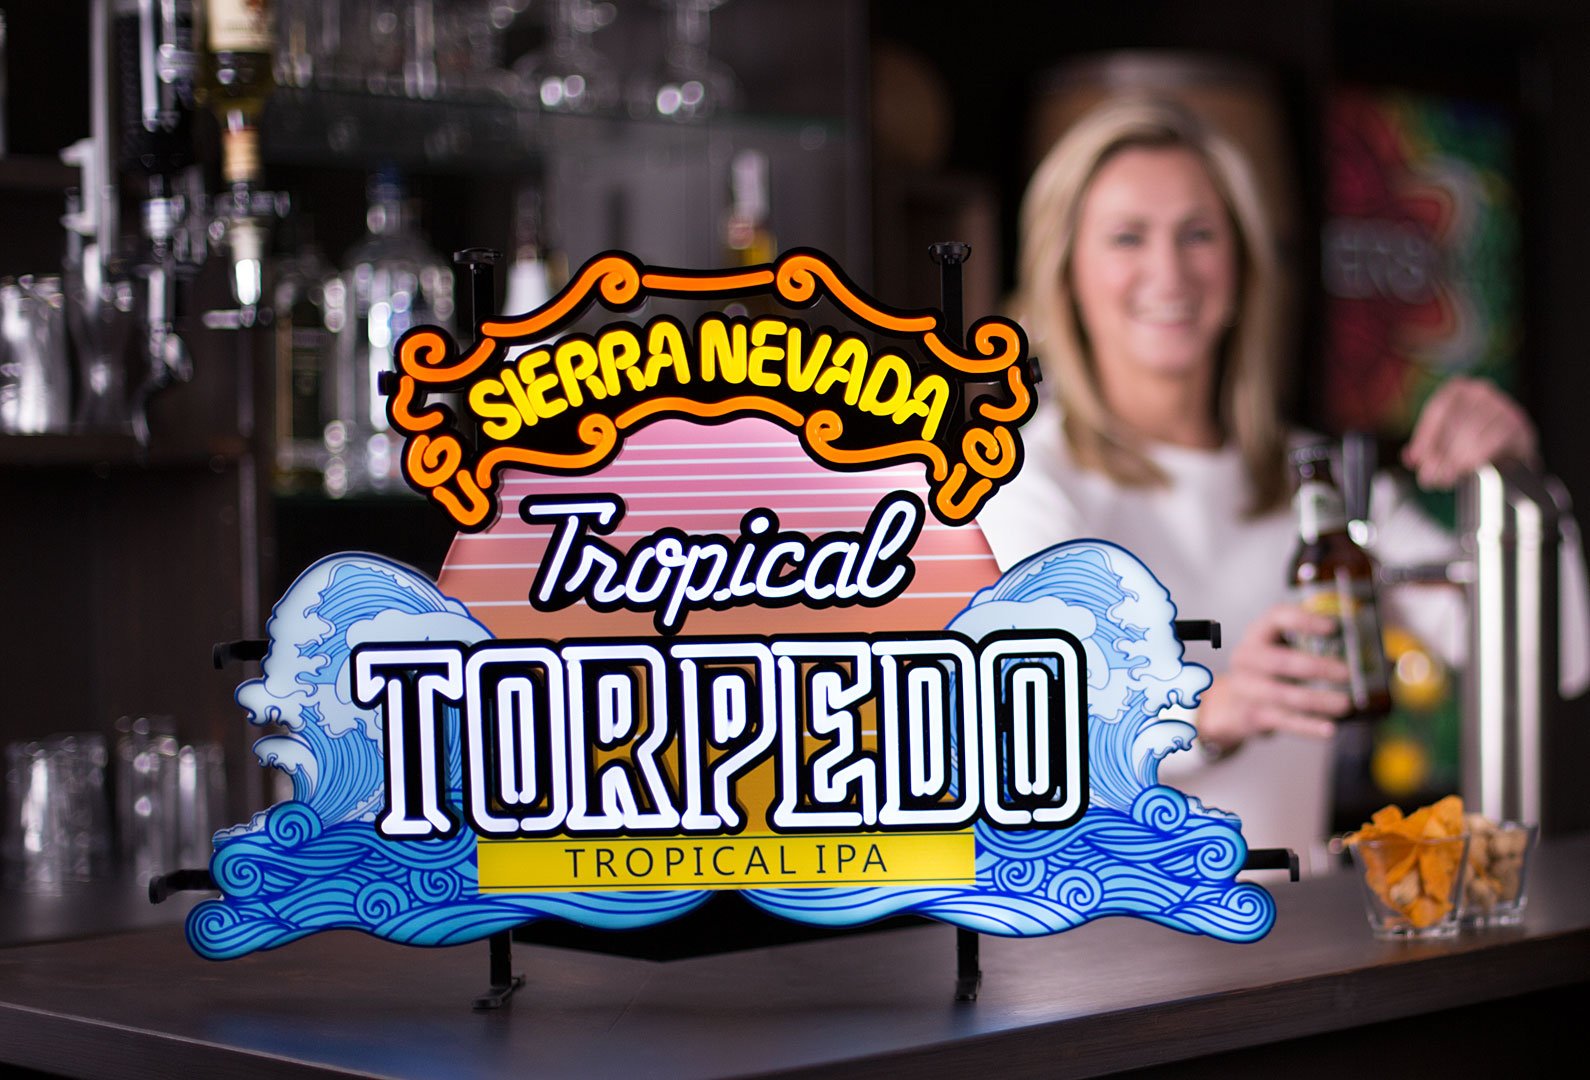 Sierra Nevada Tropical Torpedo LEDNeon